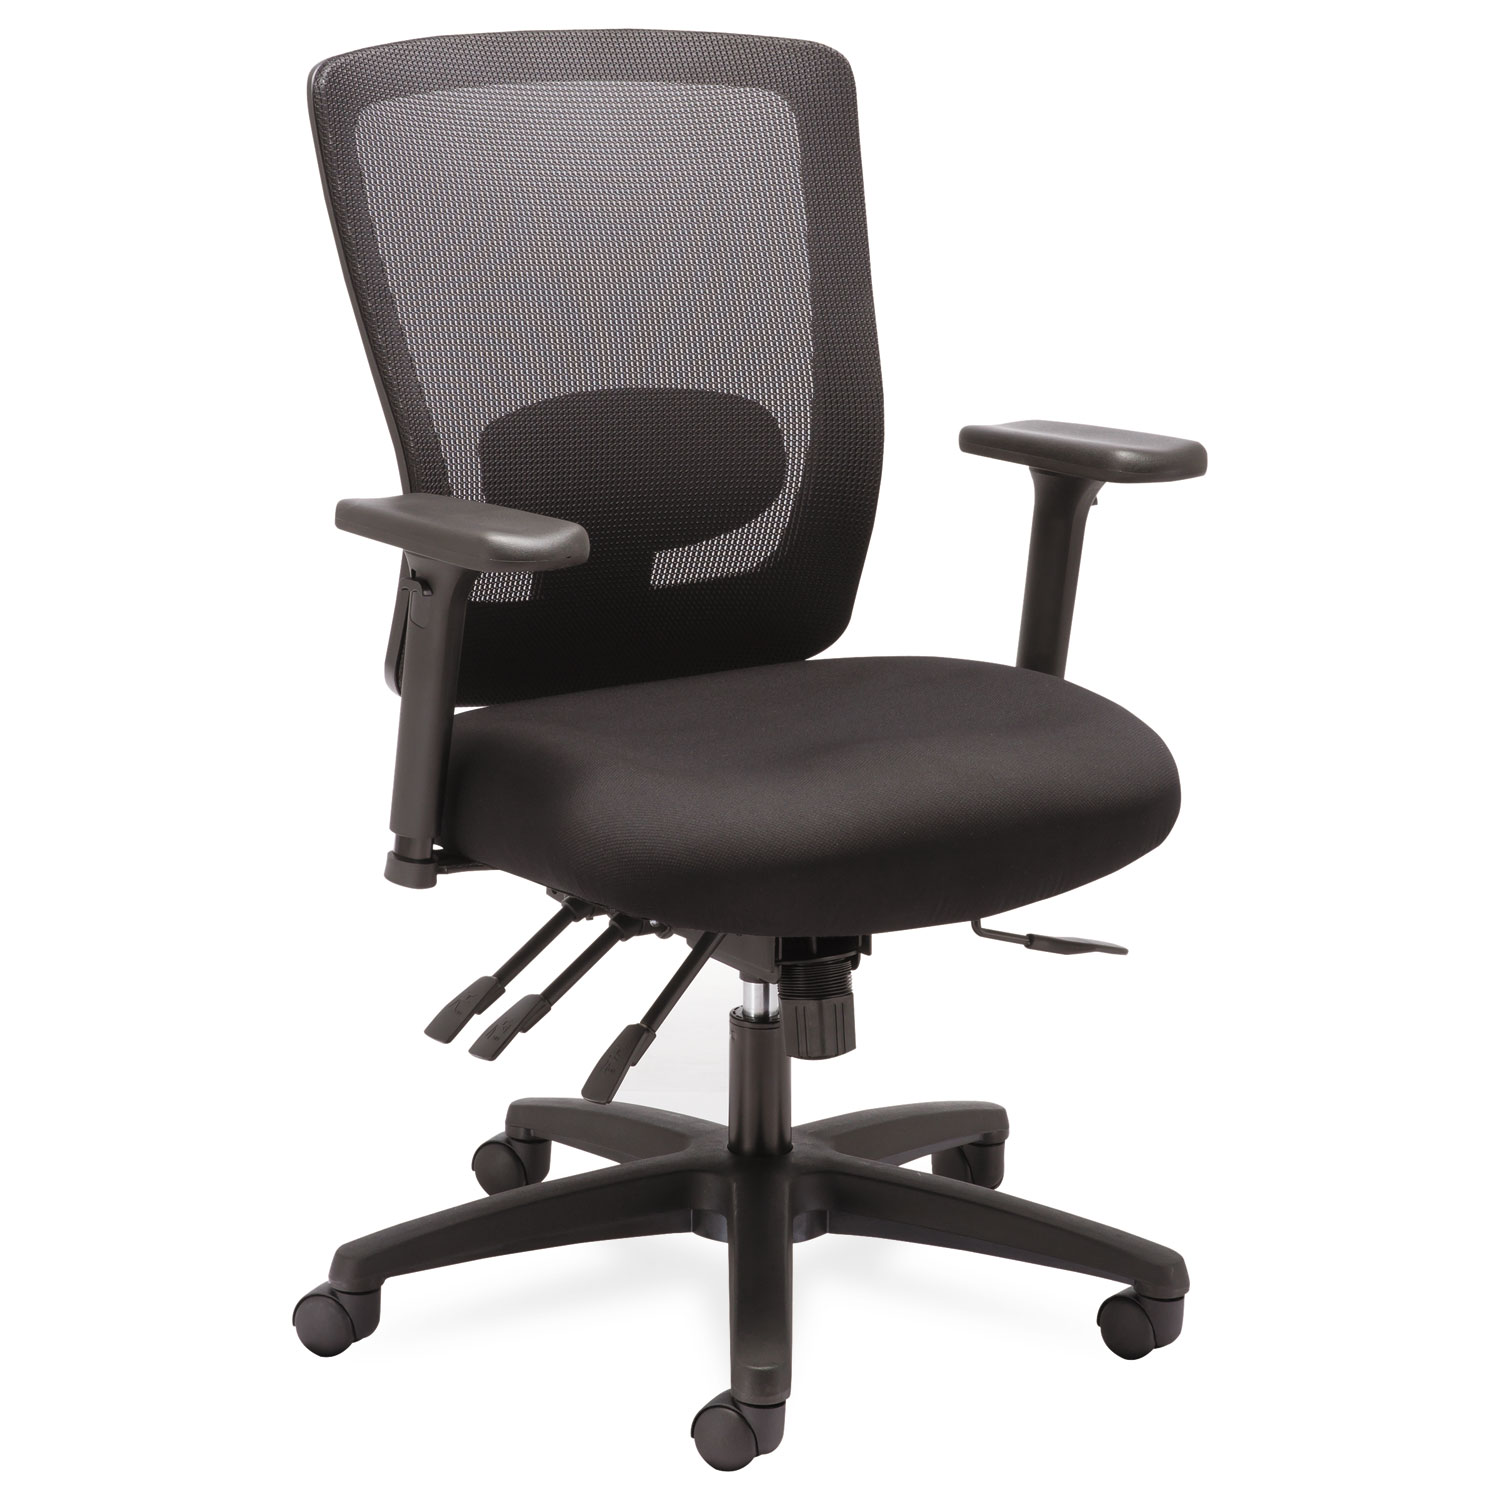  Alera ALENV42M14 Alera Envy Series Mesh Mid-Back Multifunction Chair, Supports up to 250 lbs., Black Seat/Black Back, Black Base (ALENV42M14) 